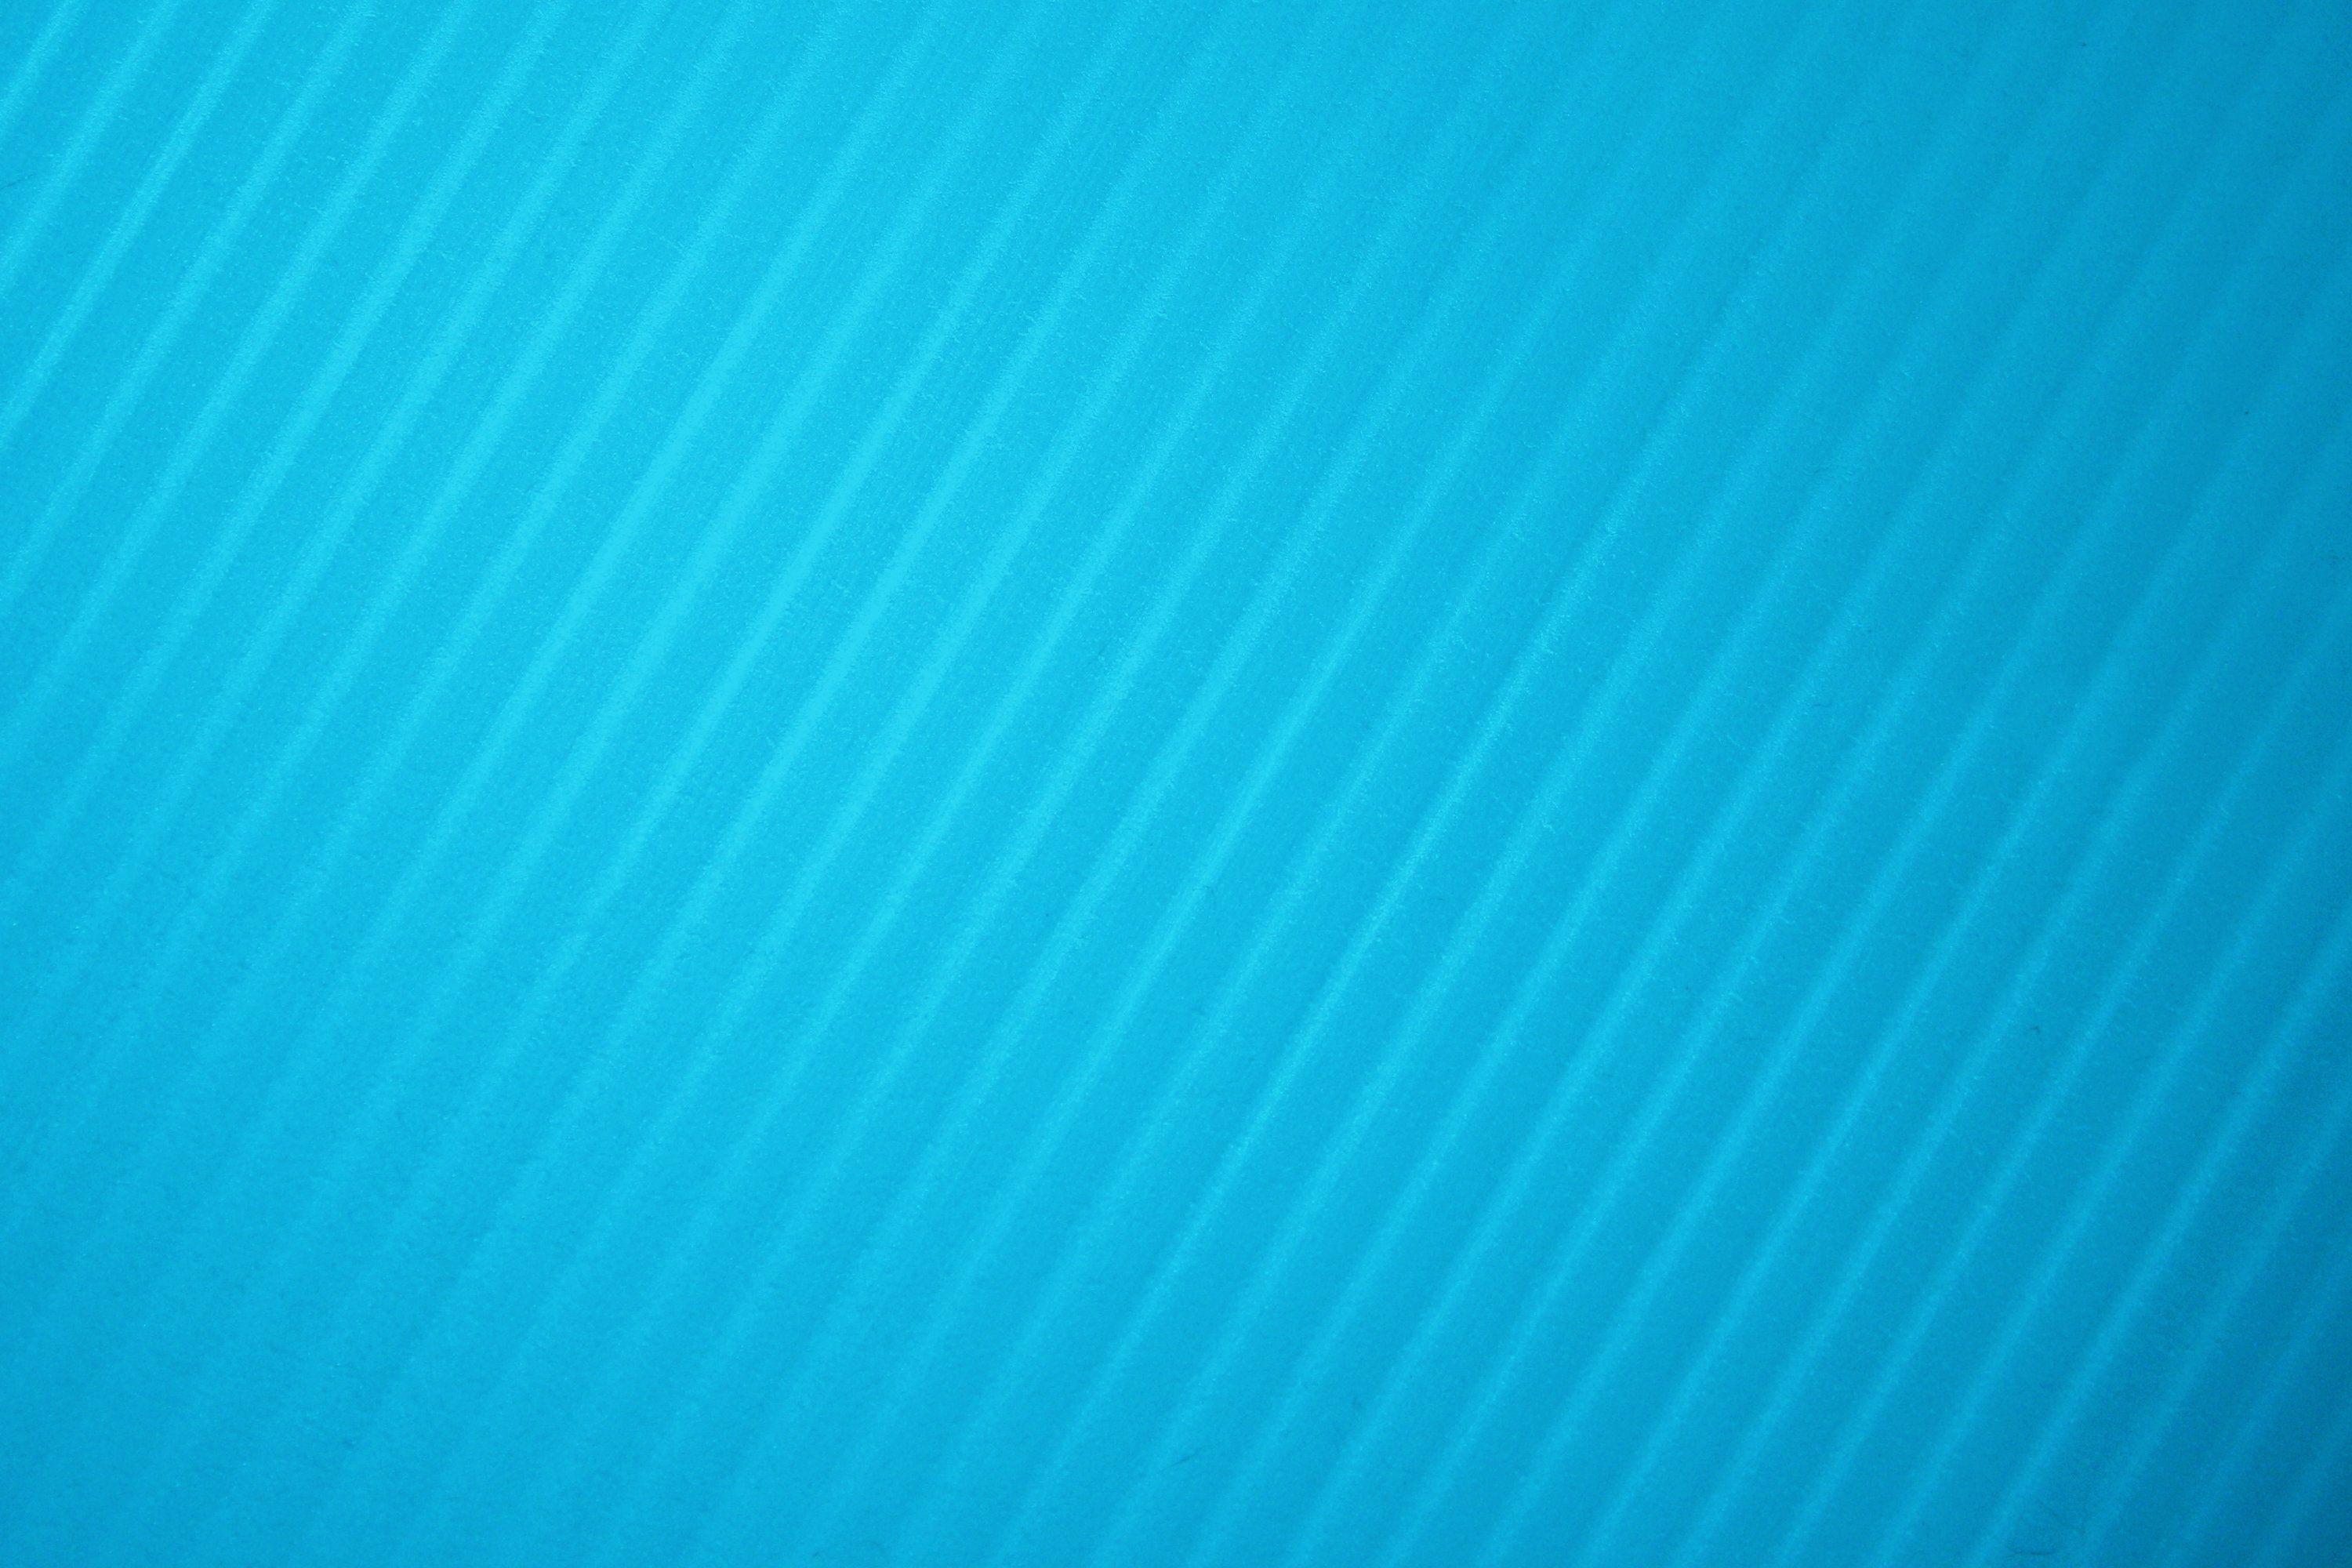 Sky Blue Diagonal Striped Plastic Texture Picture. Free Photograph